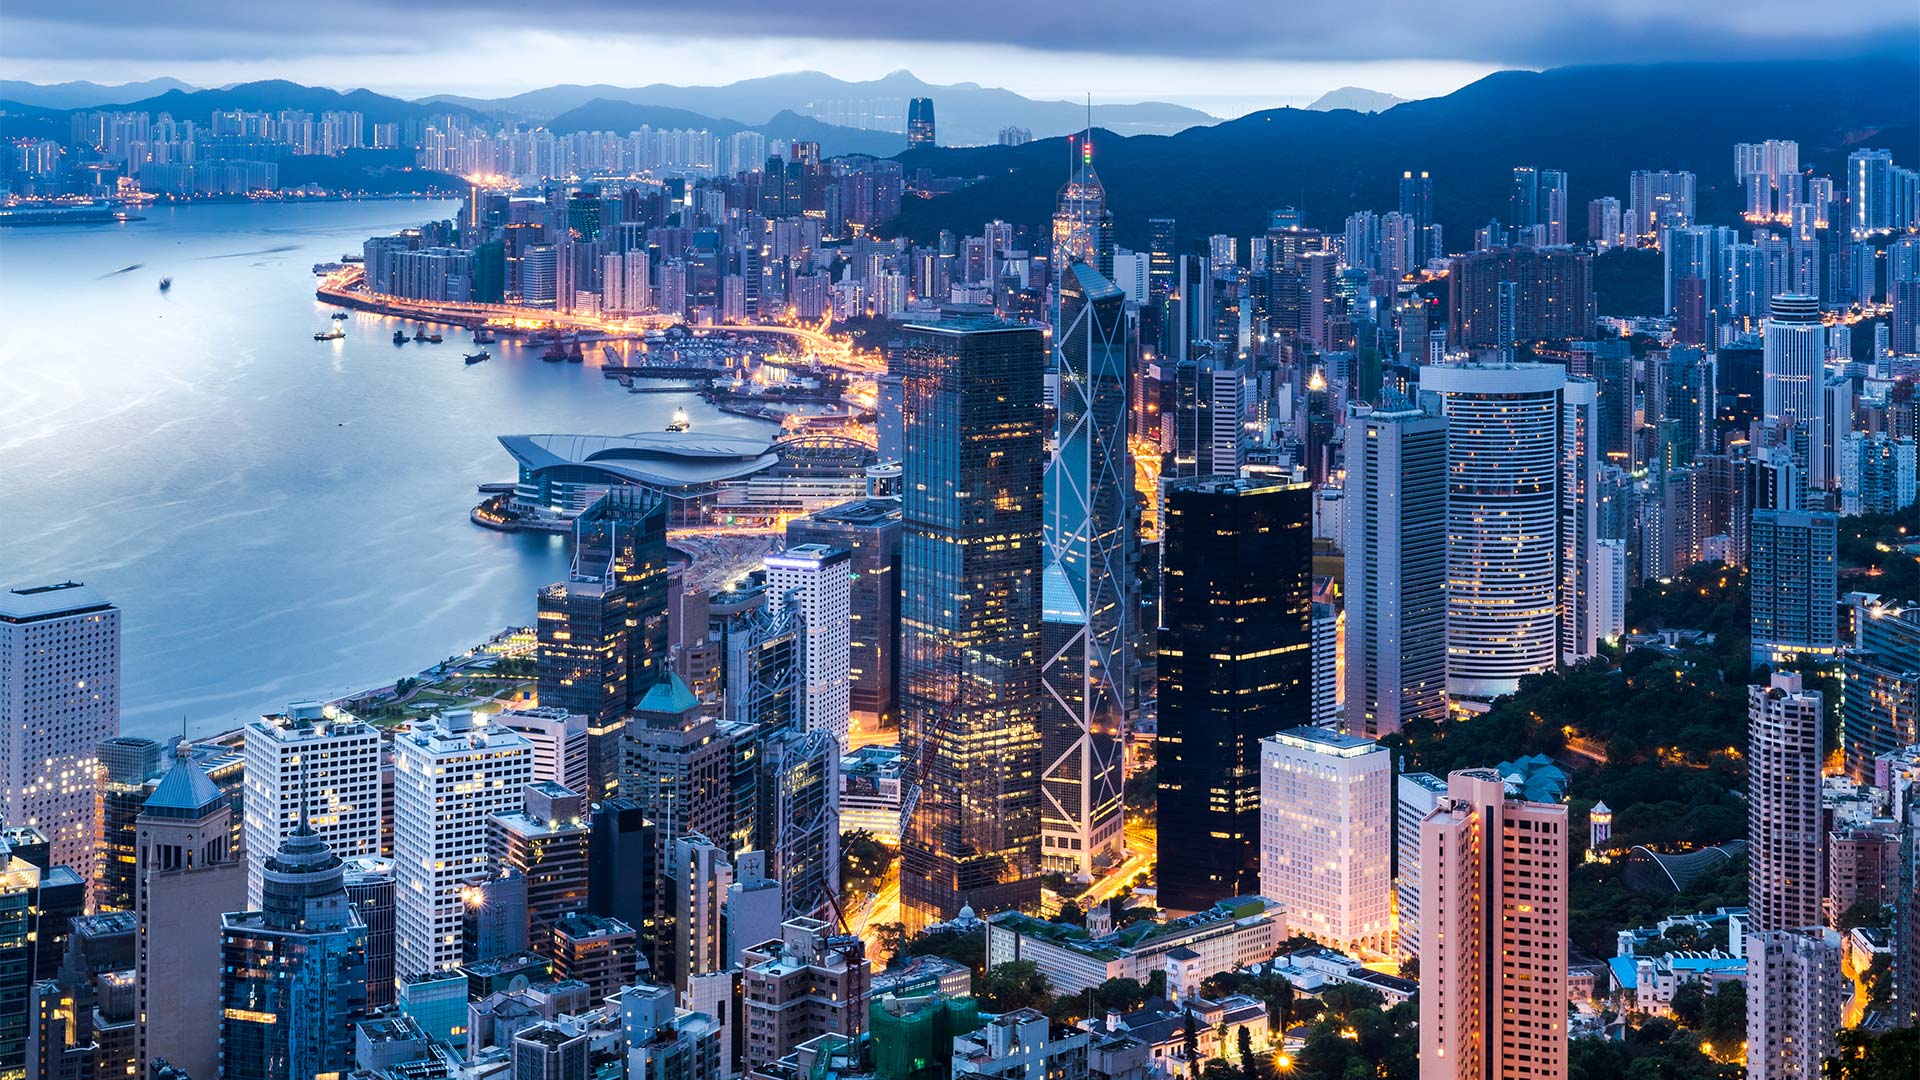 City view of the city of Hong Kong at twilight